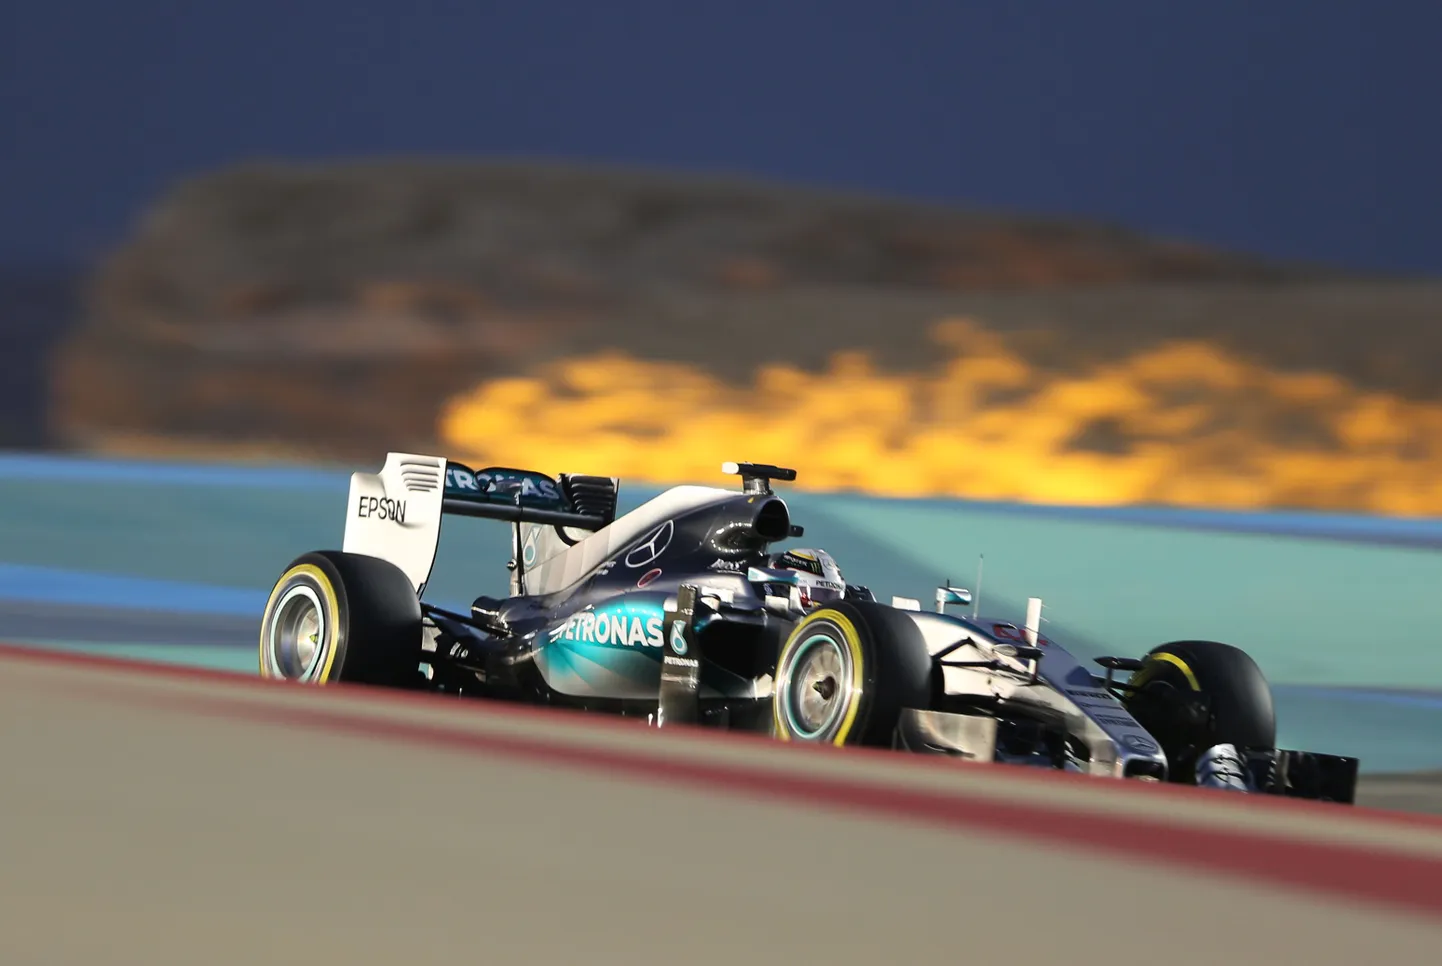 Vormel-1 sarja valitsev maailmameister Lewis Hamilton Mercedese roolis.